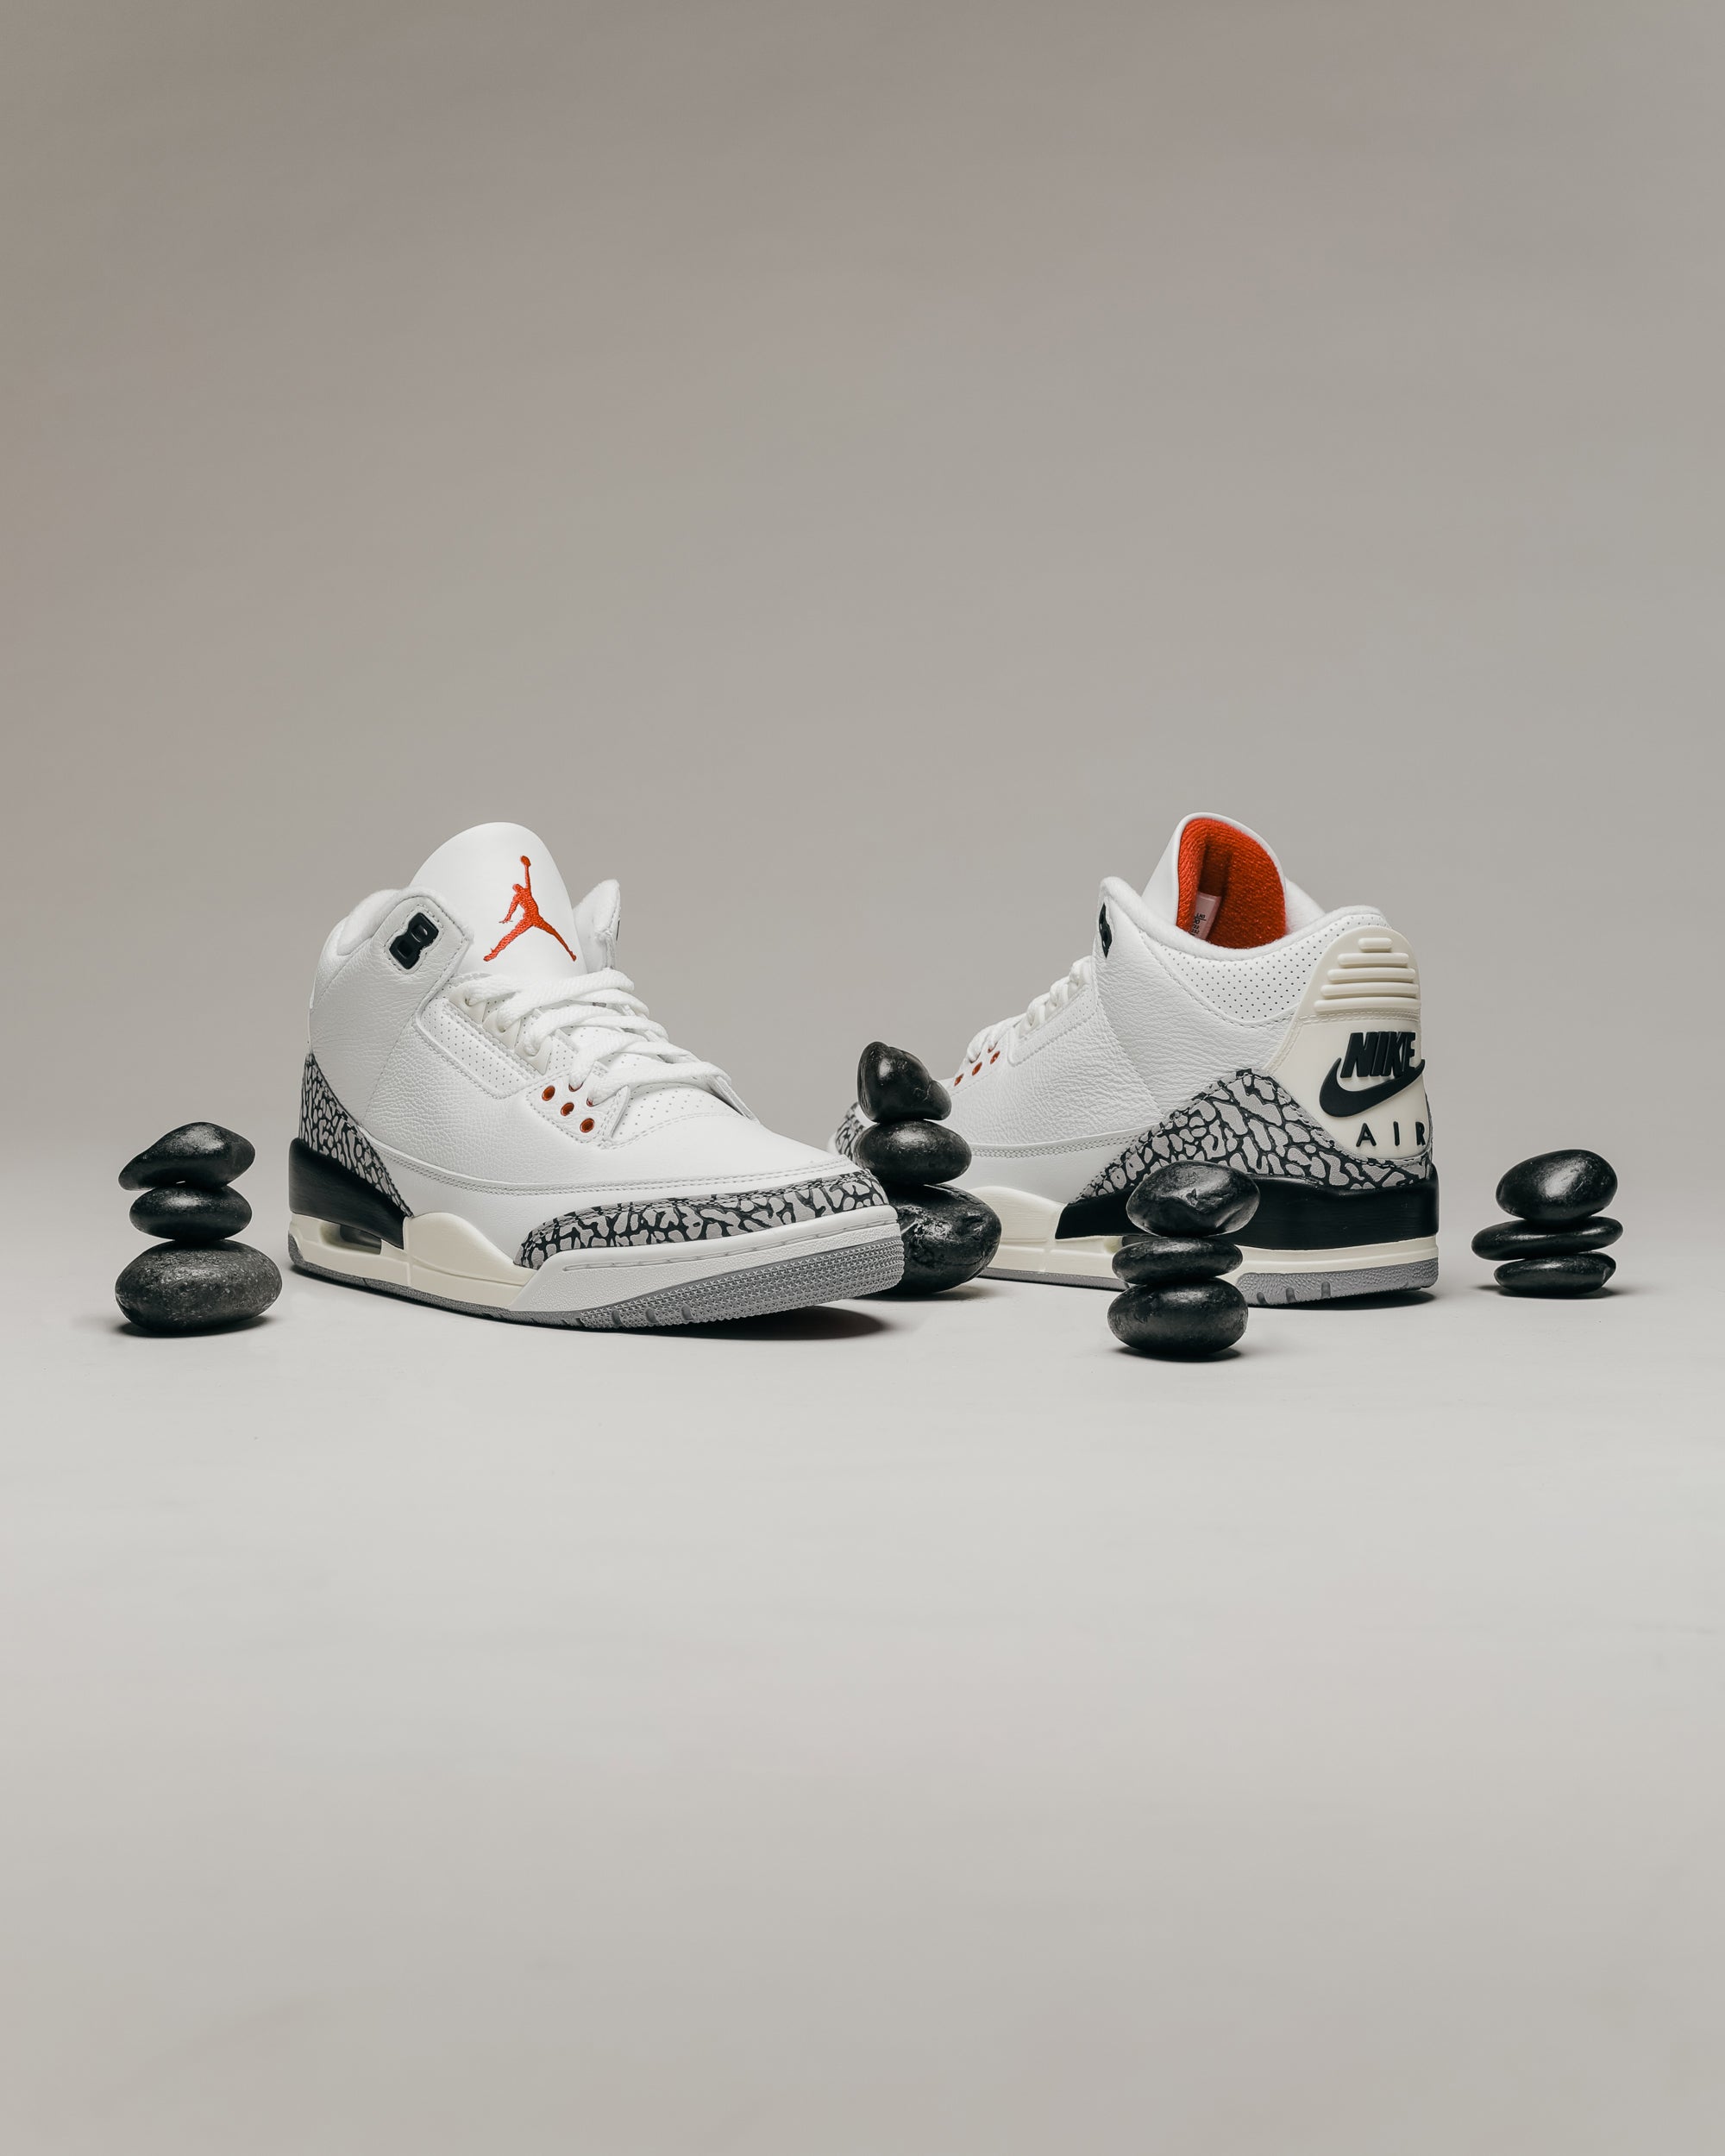 Air Jordan 3 Retro “White Cement Reimagined” – The Darkside Initiative